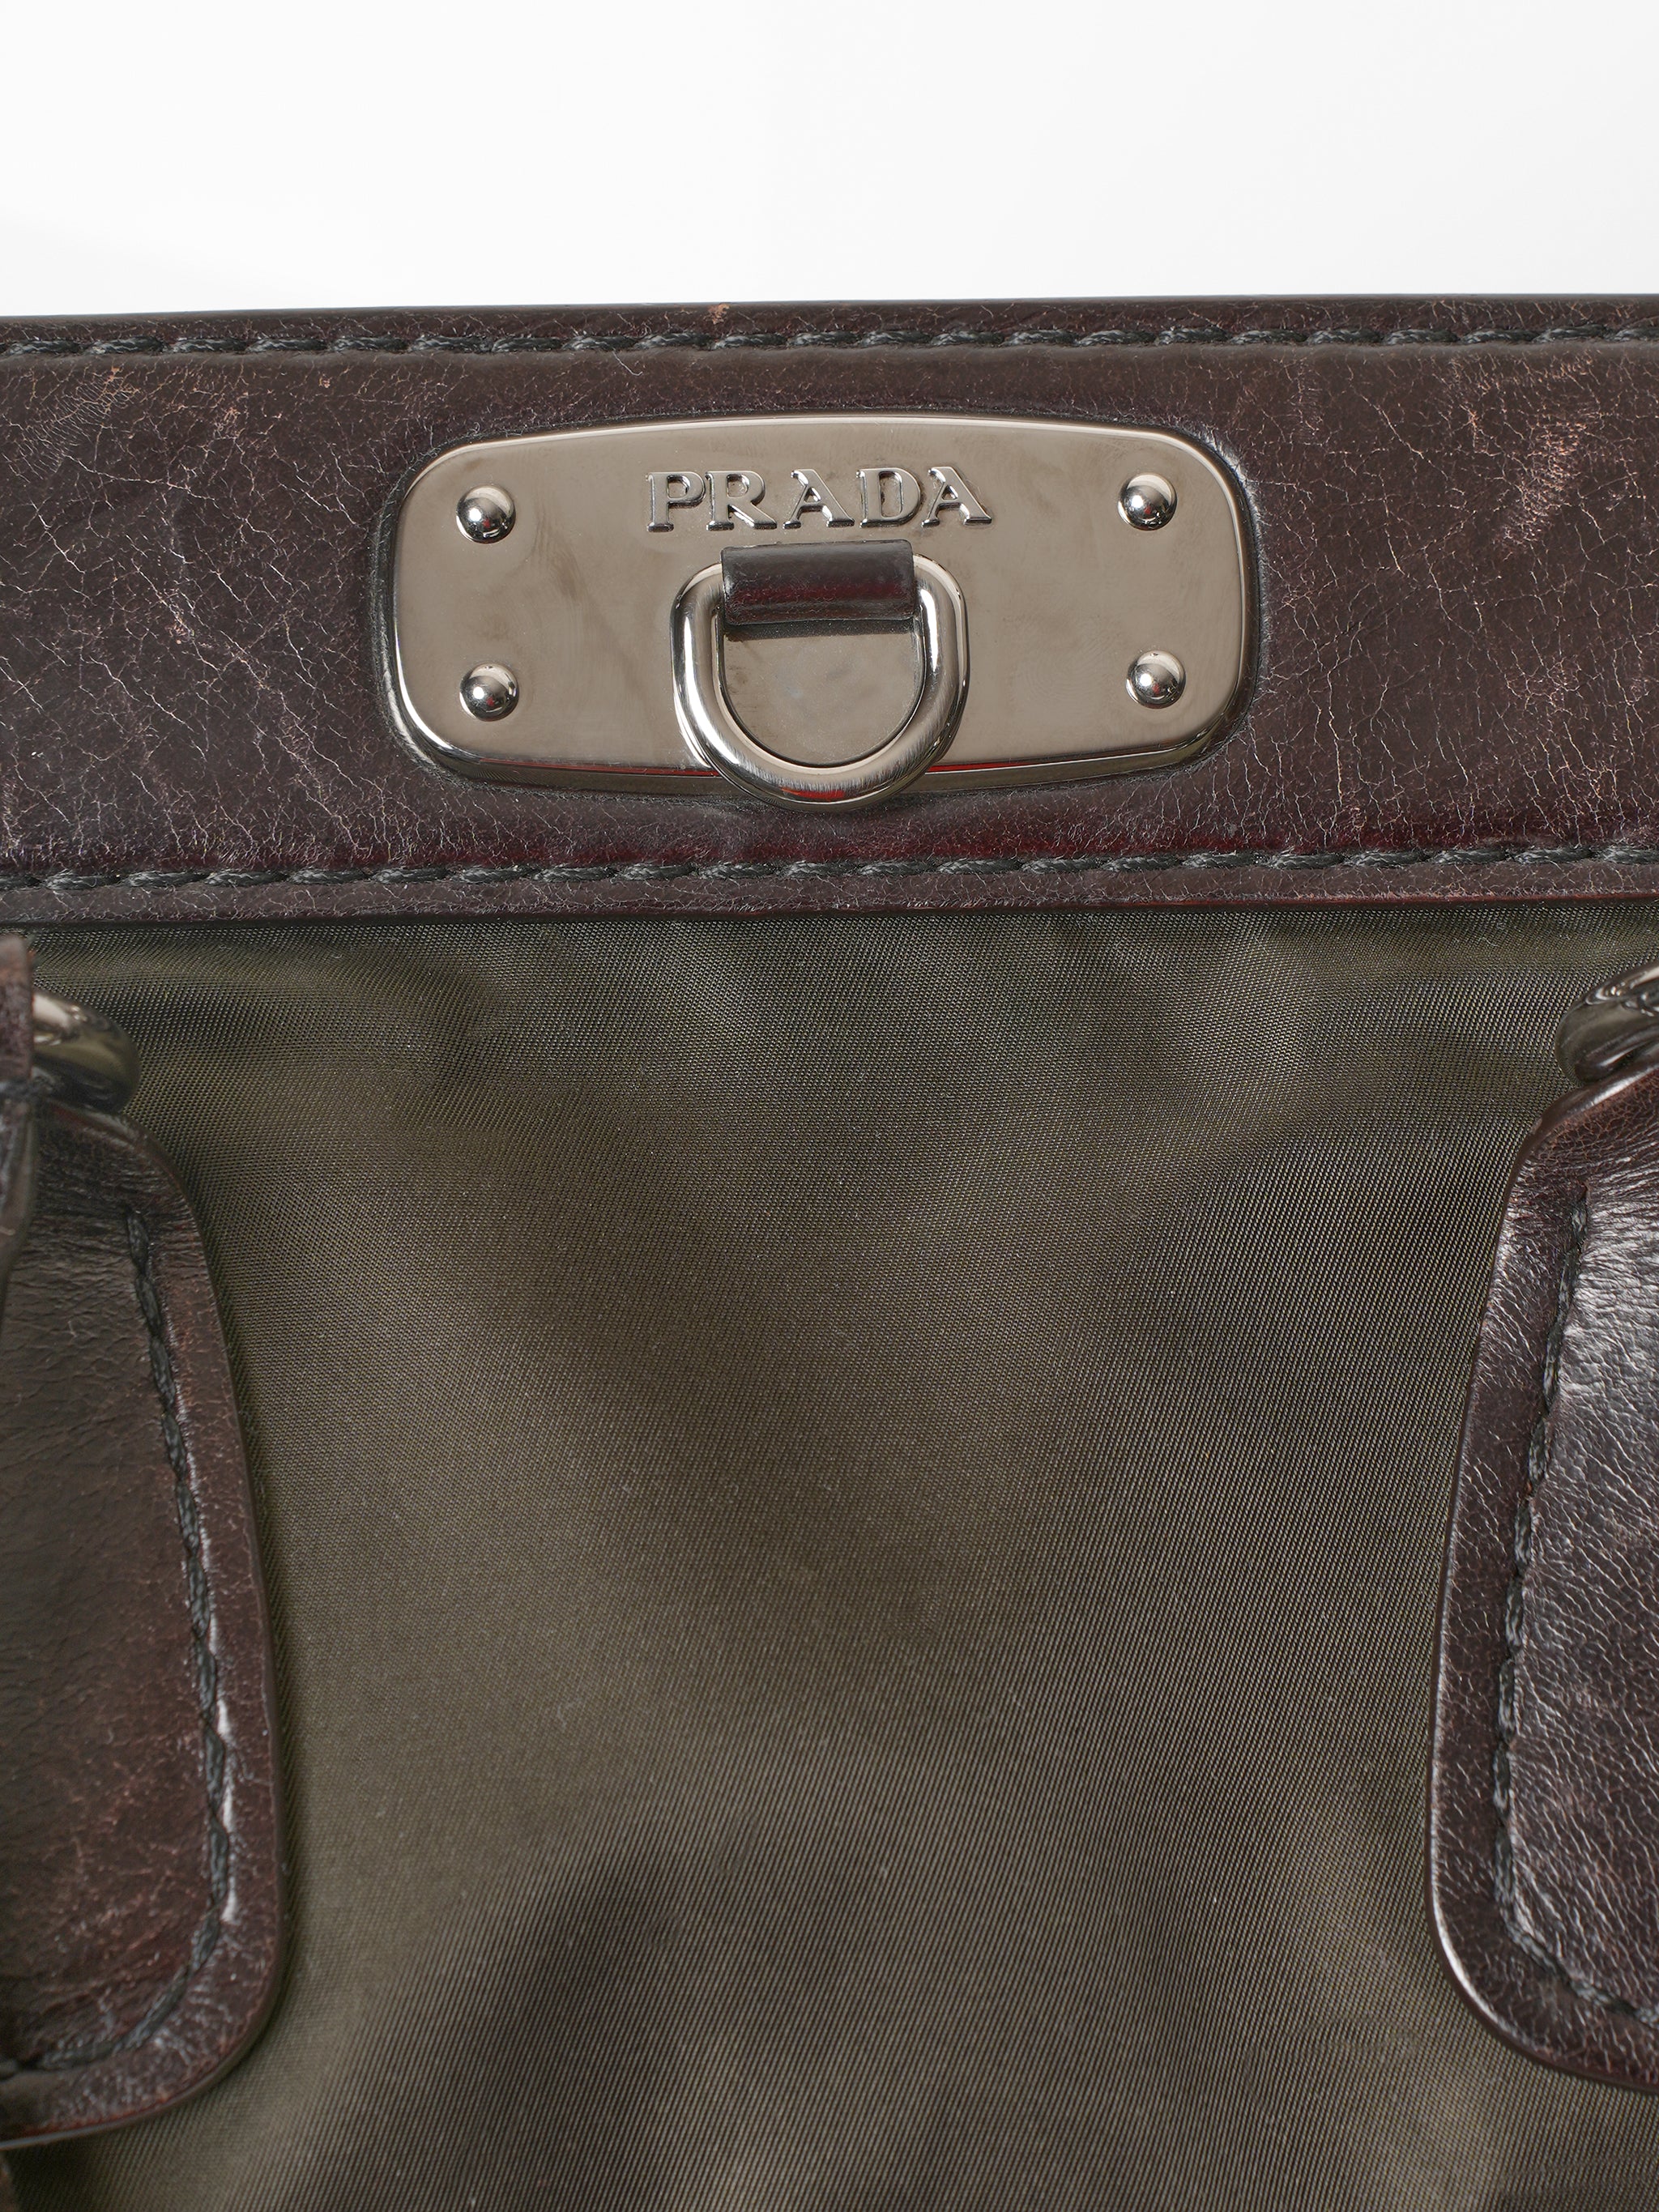 Prada Handbags at Best Price in Gurugram | Blossomurworld